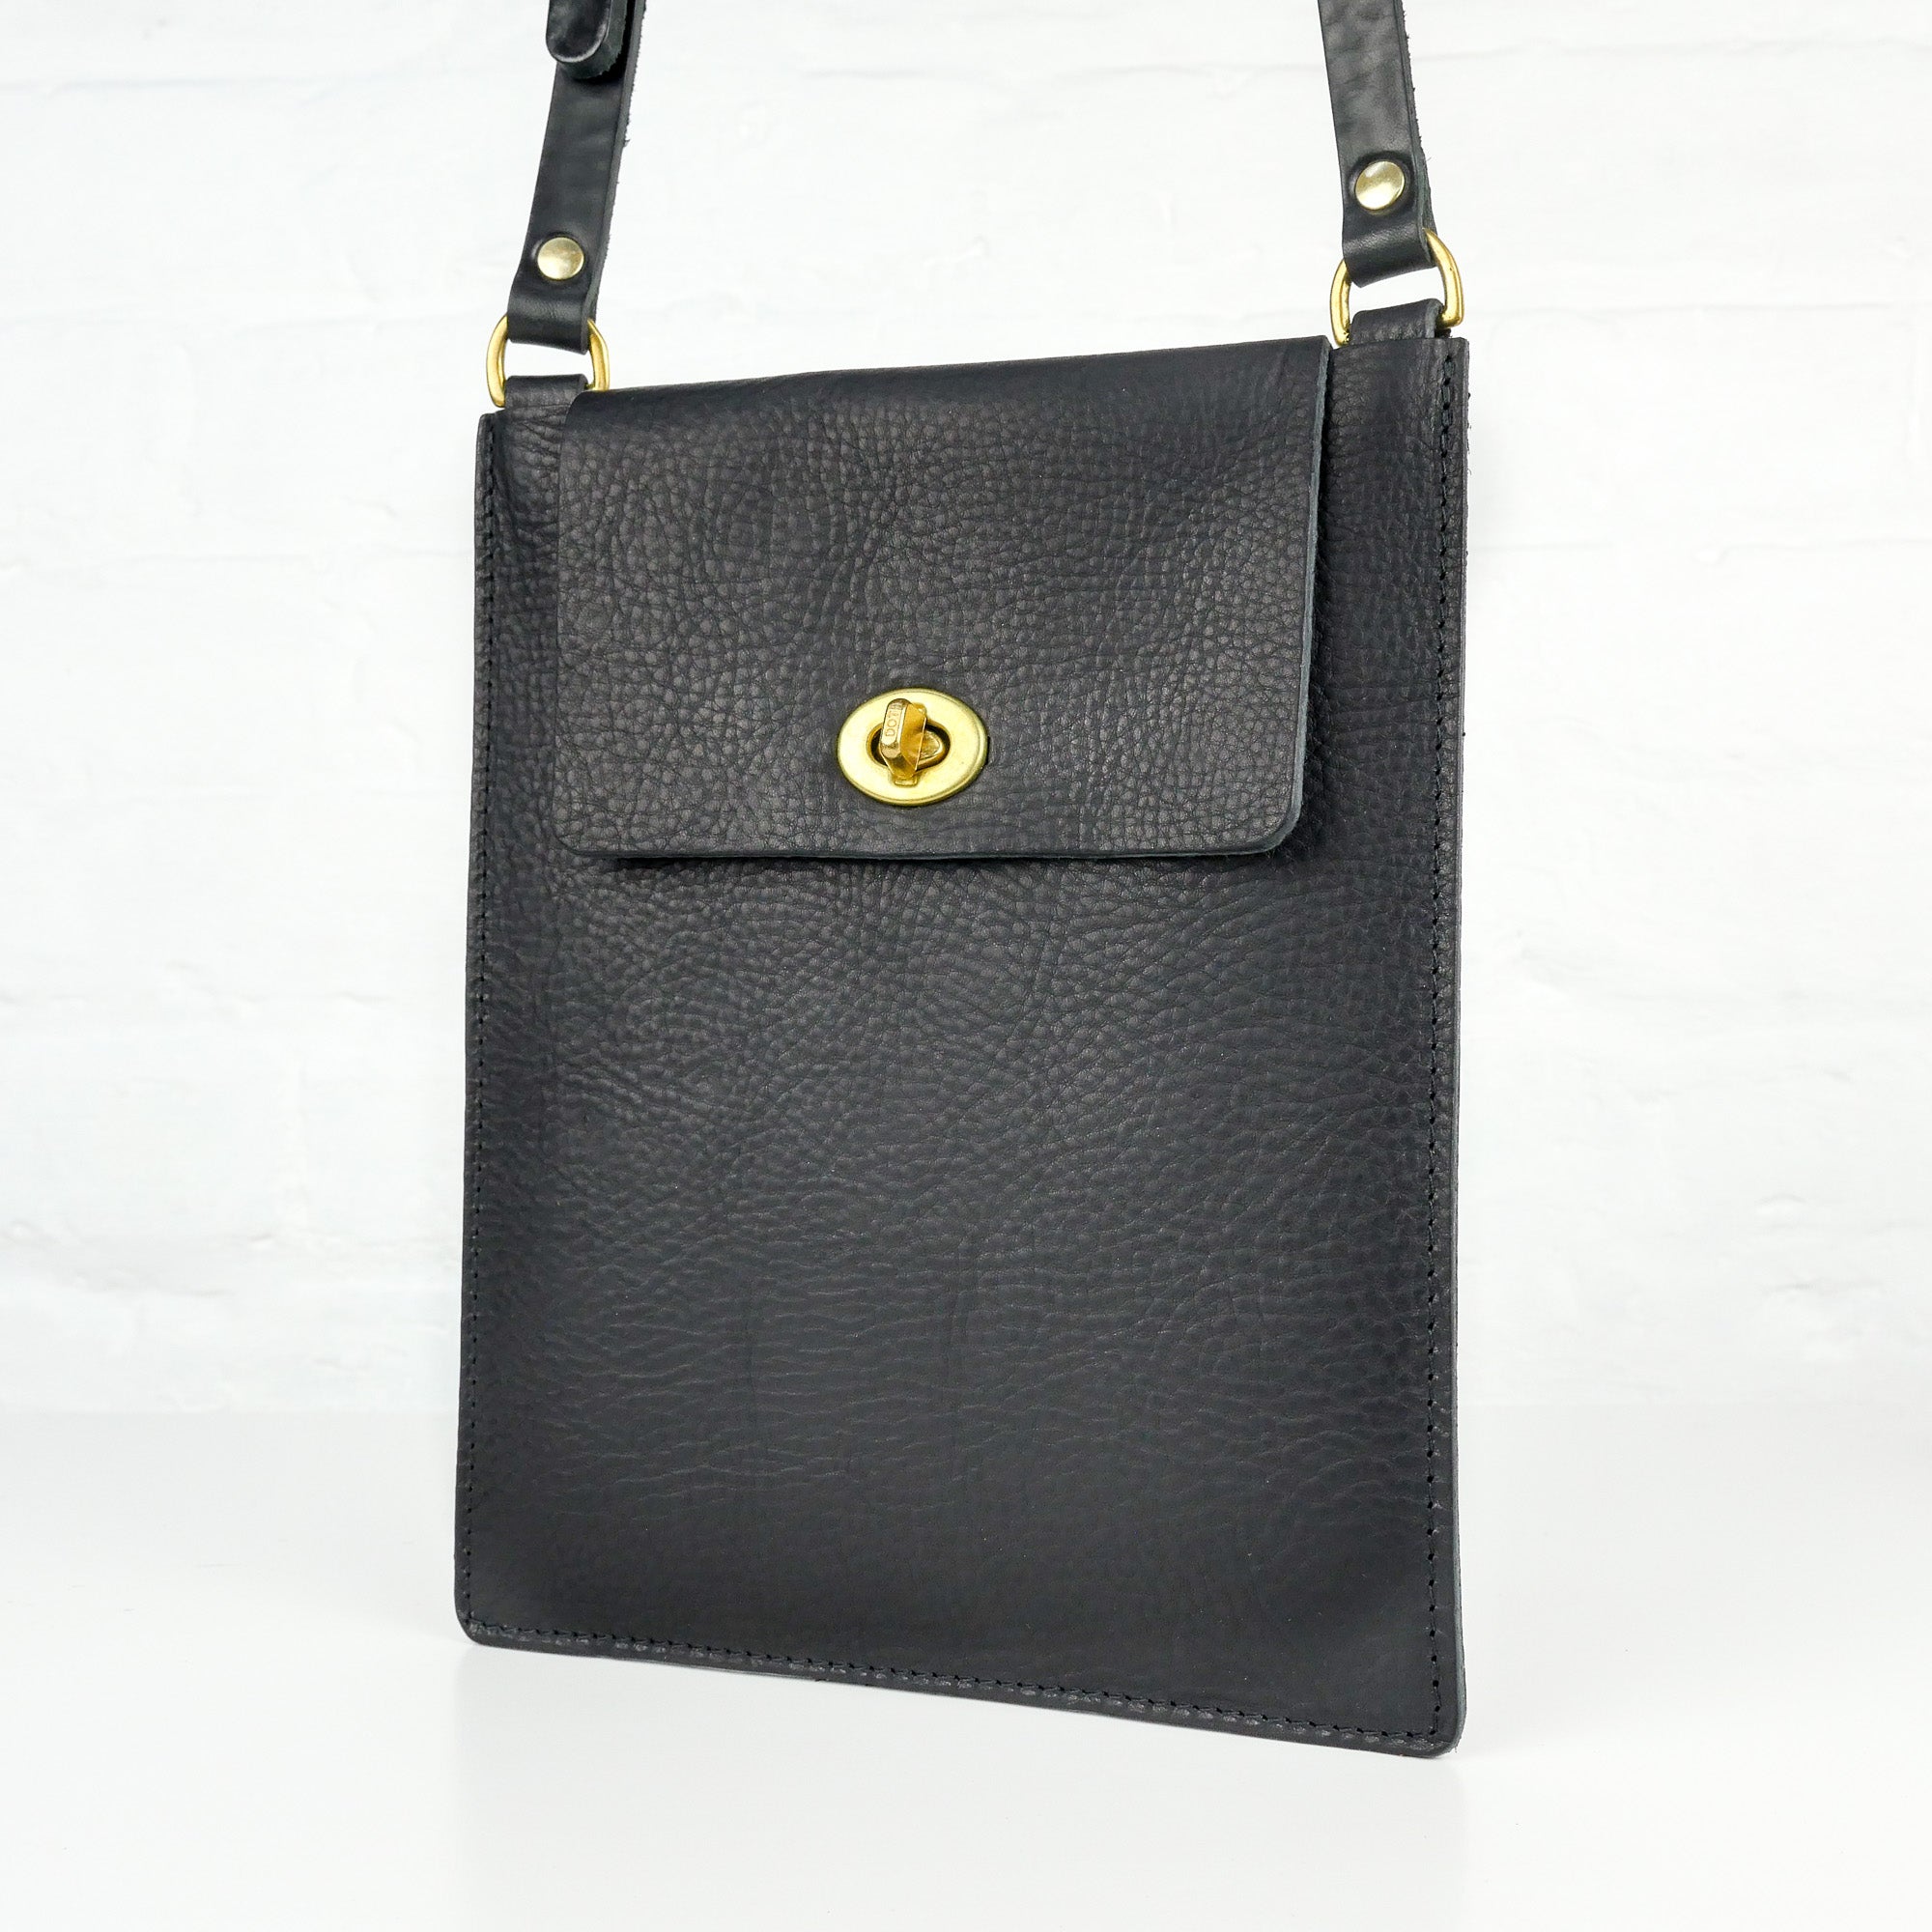 Flat Black Leather Turnlock Bag